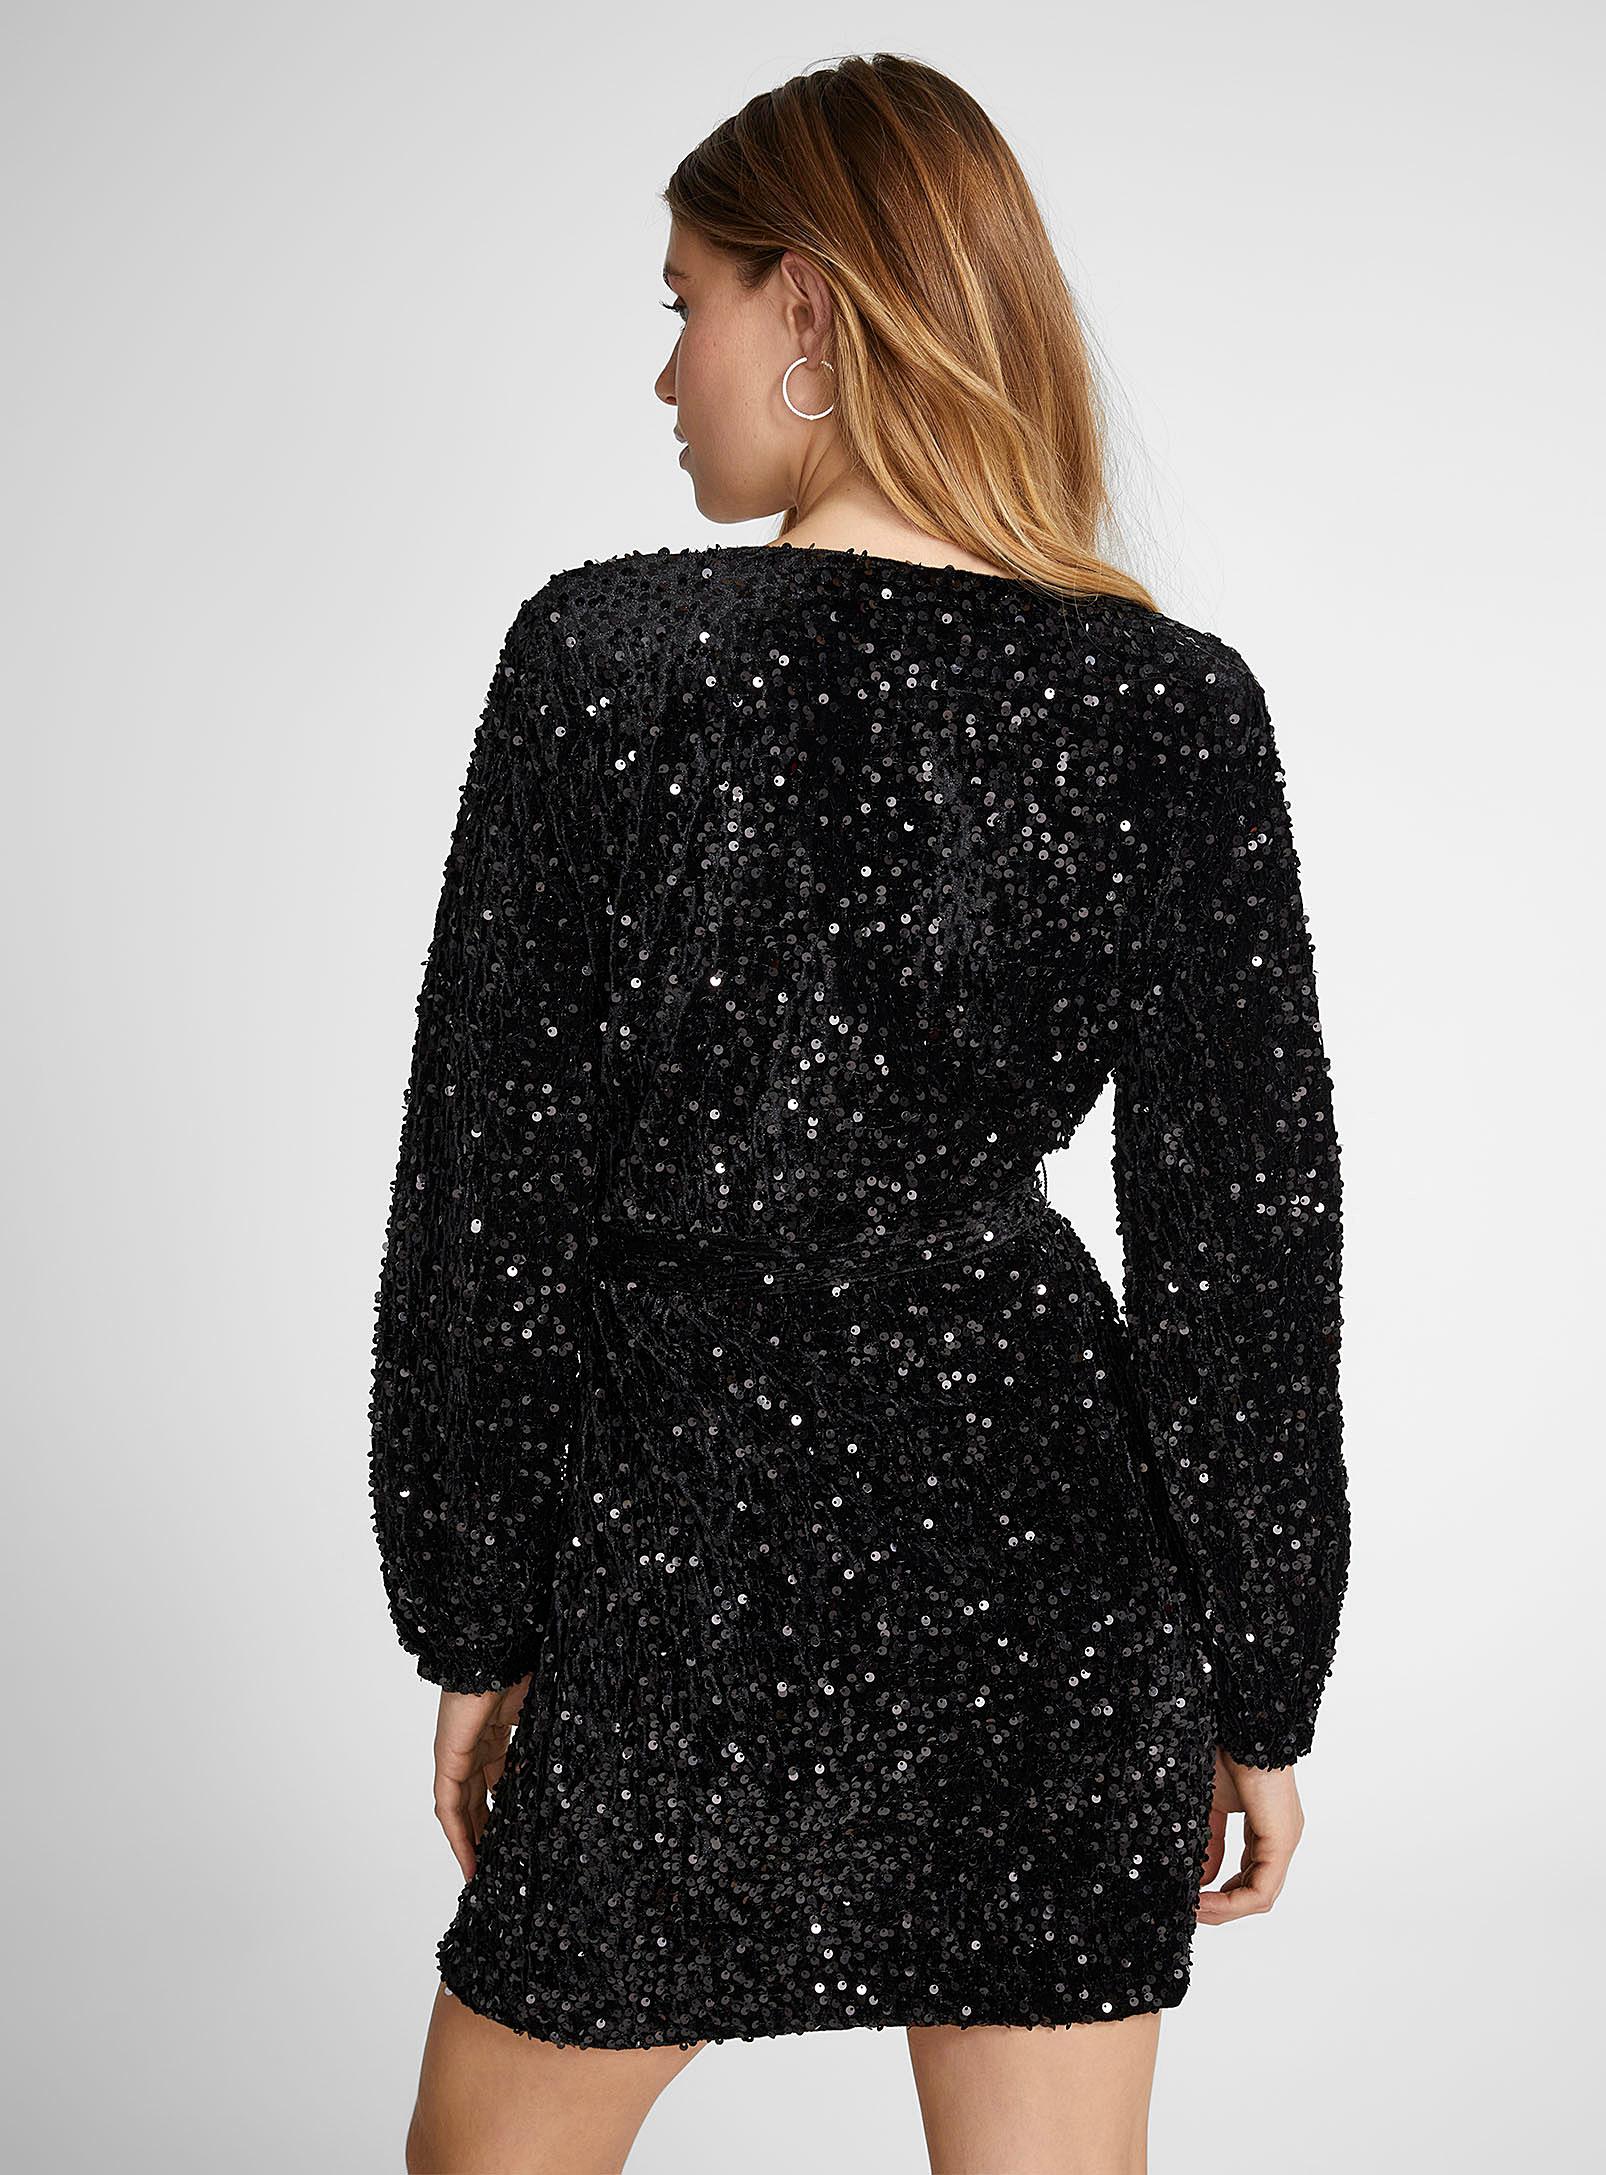 Vero Moda Velvet And Sequins Wraparound Dress in Black | Lyst